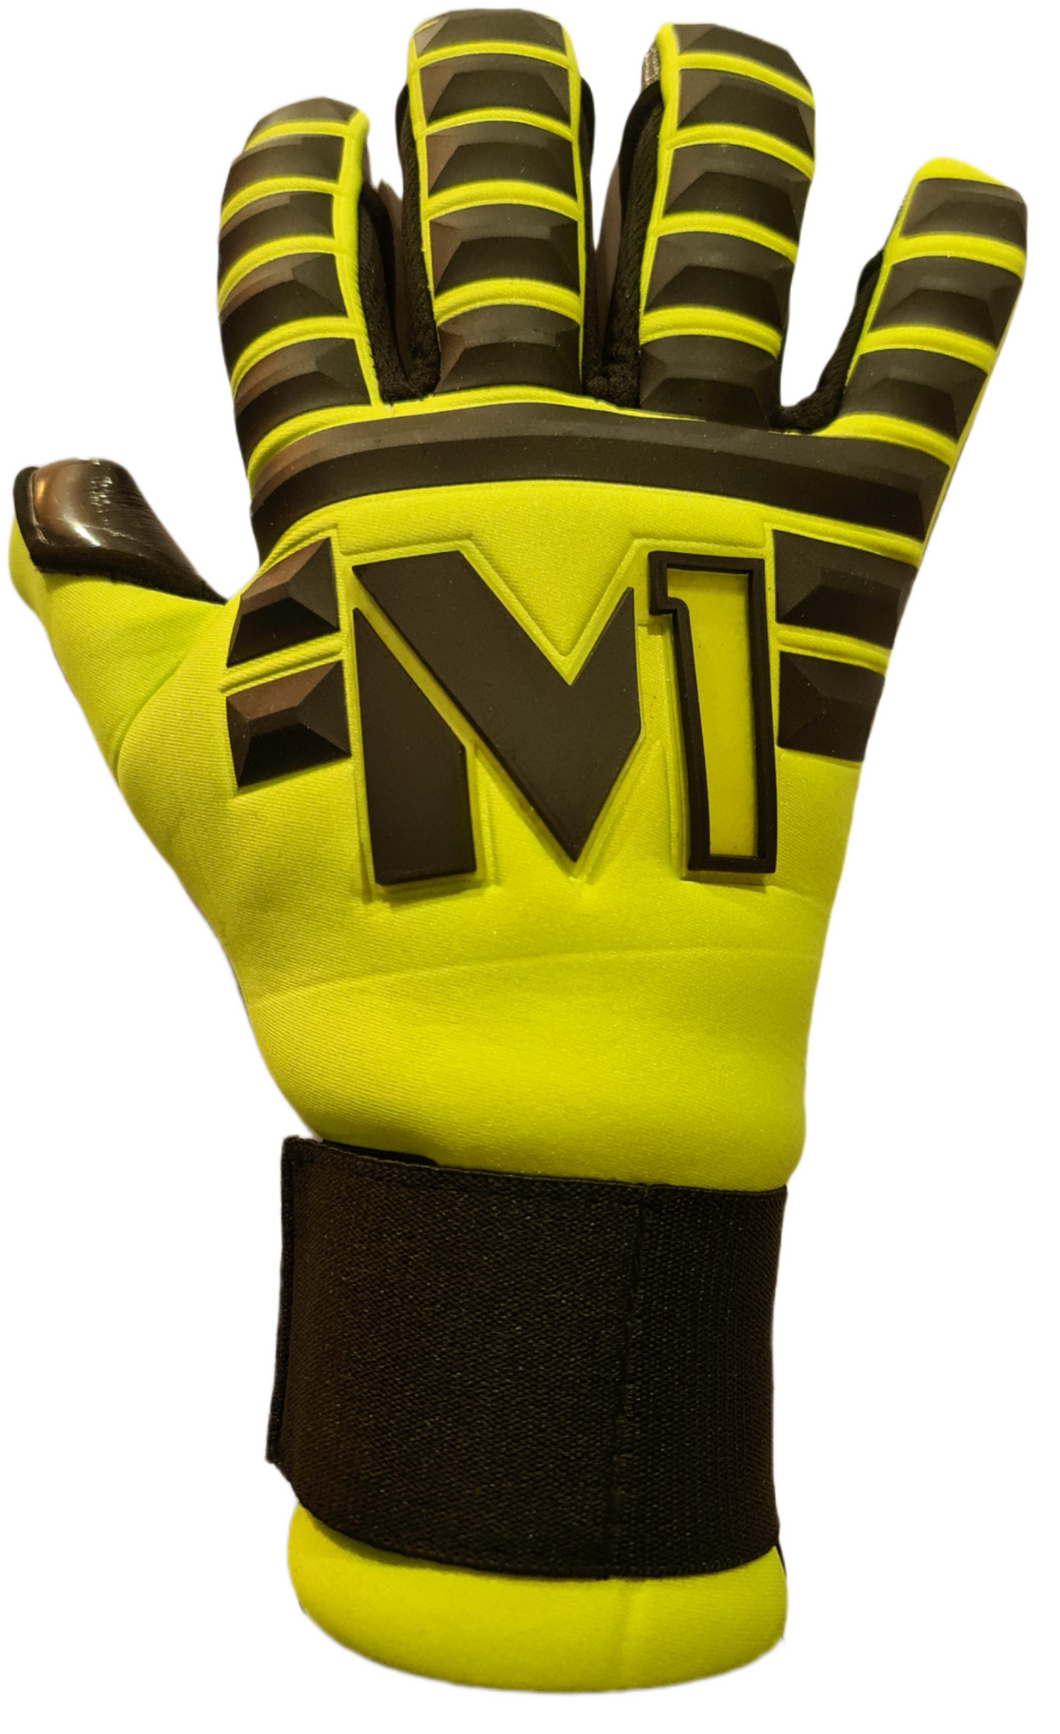 M1 Viper Yellow/Black Goalkeeper Gloves